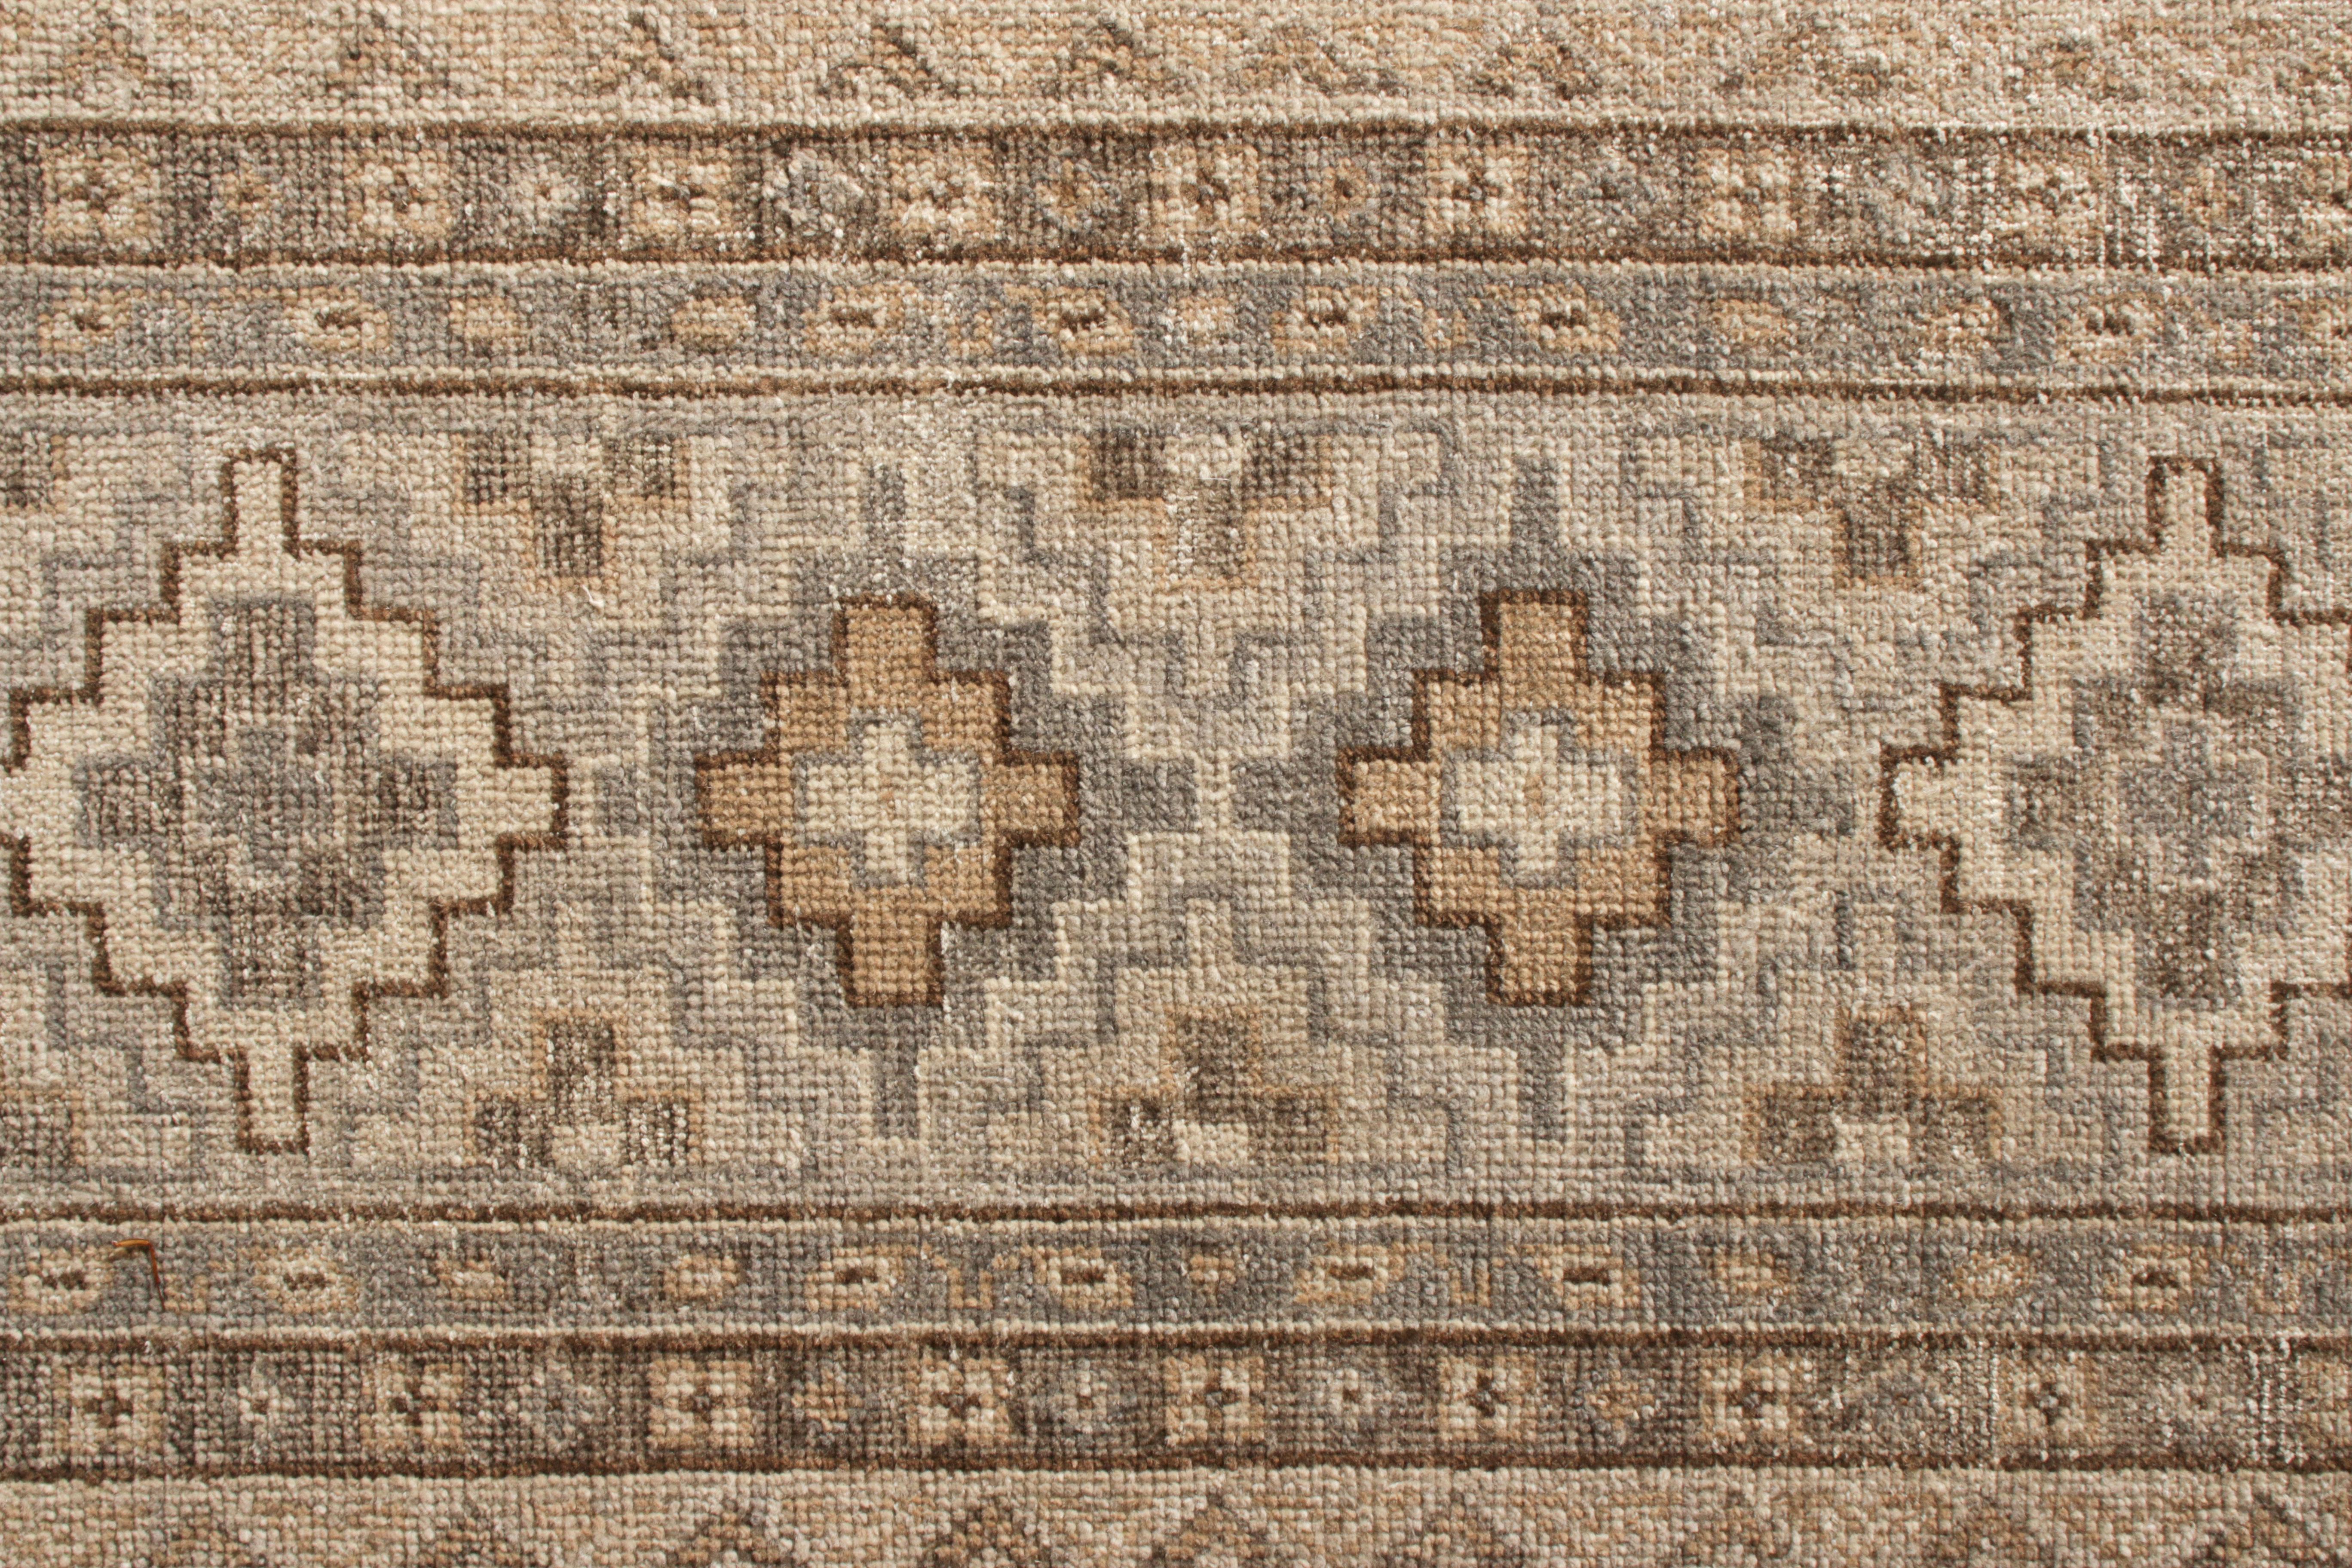 Indian Rug & Kilim’s Distressed Style Custom Rug in Gray, Beige-Brown Geometric Pattern For Sale